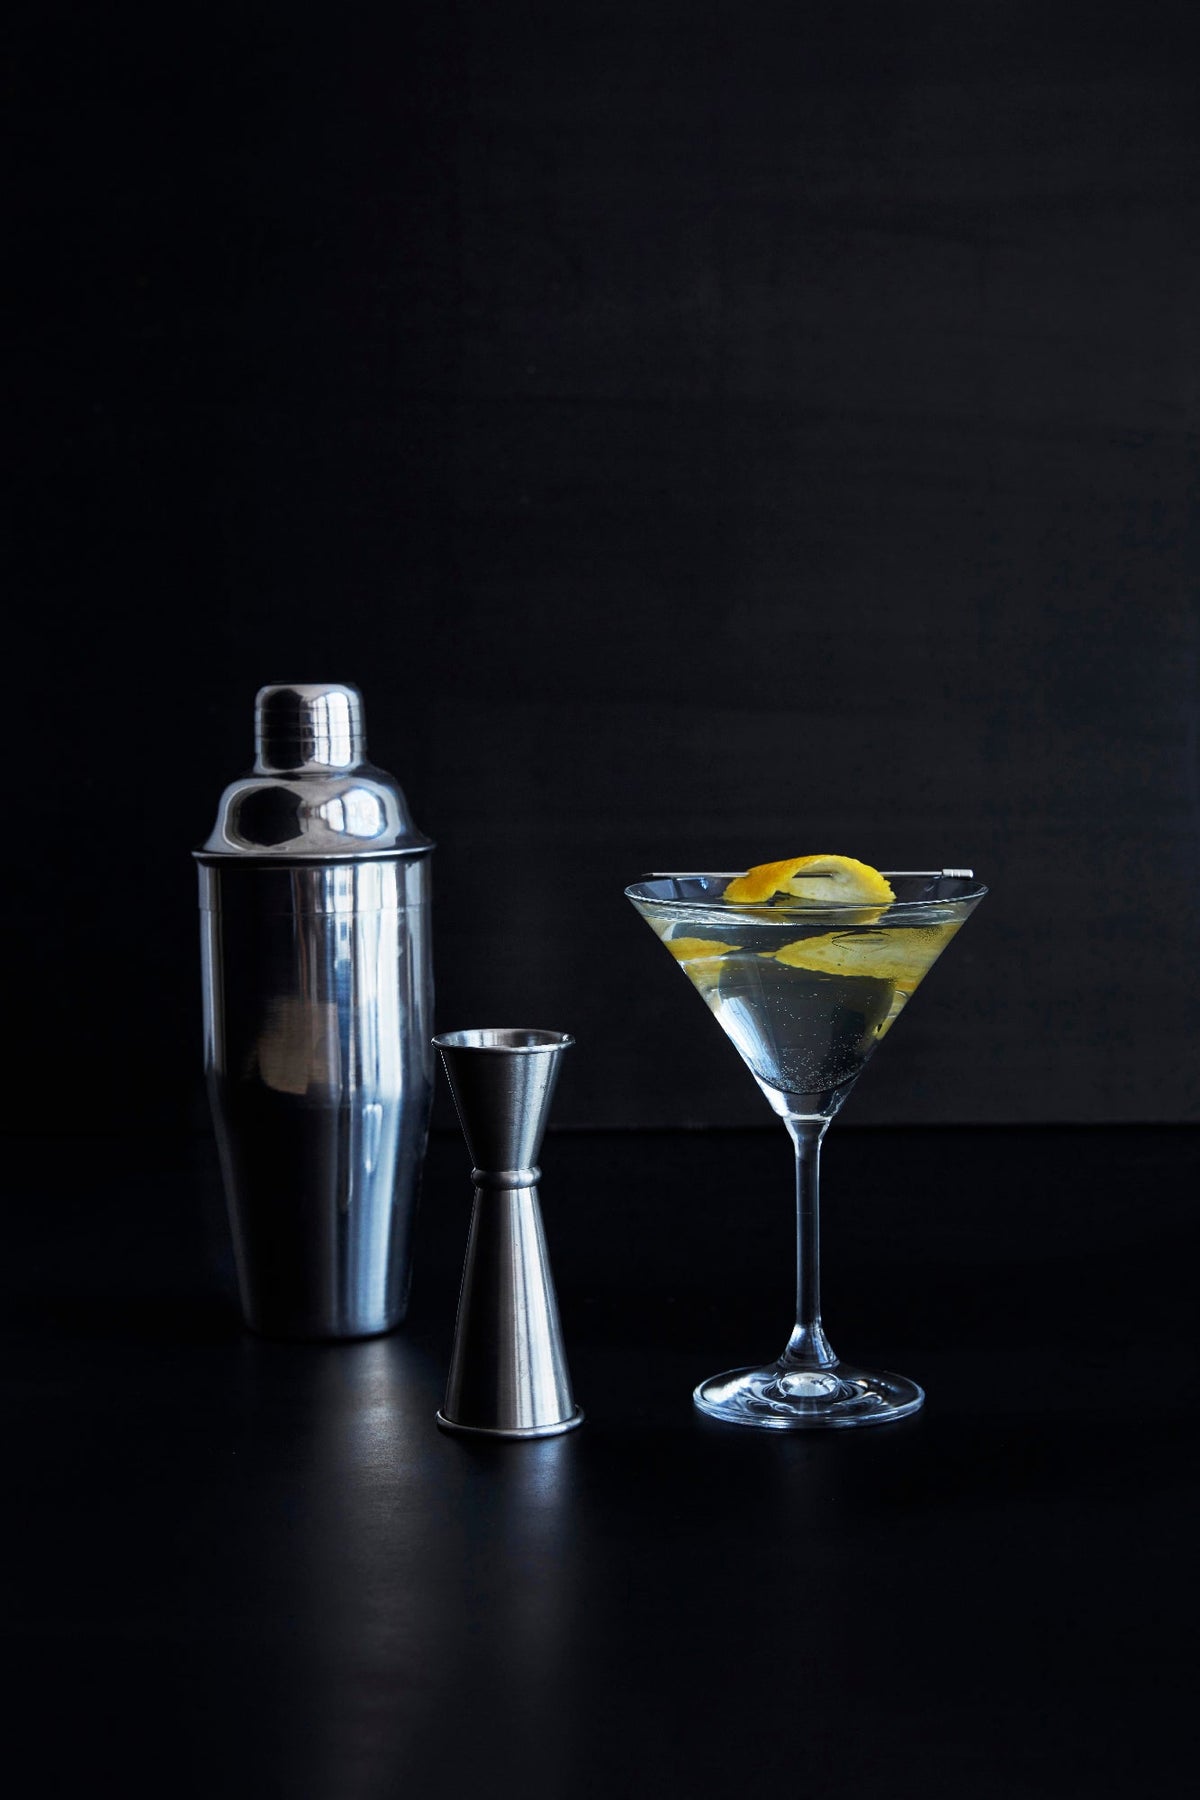 Canvas Home Martini Glass, Set of 4